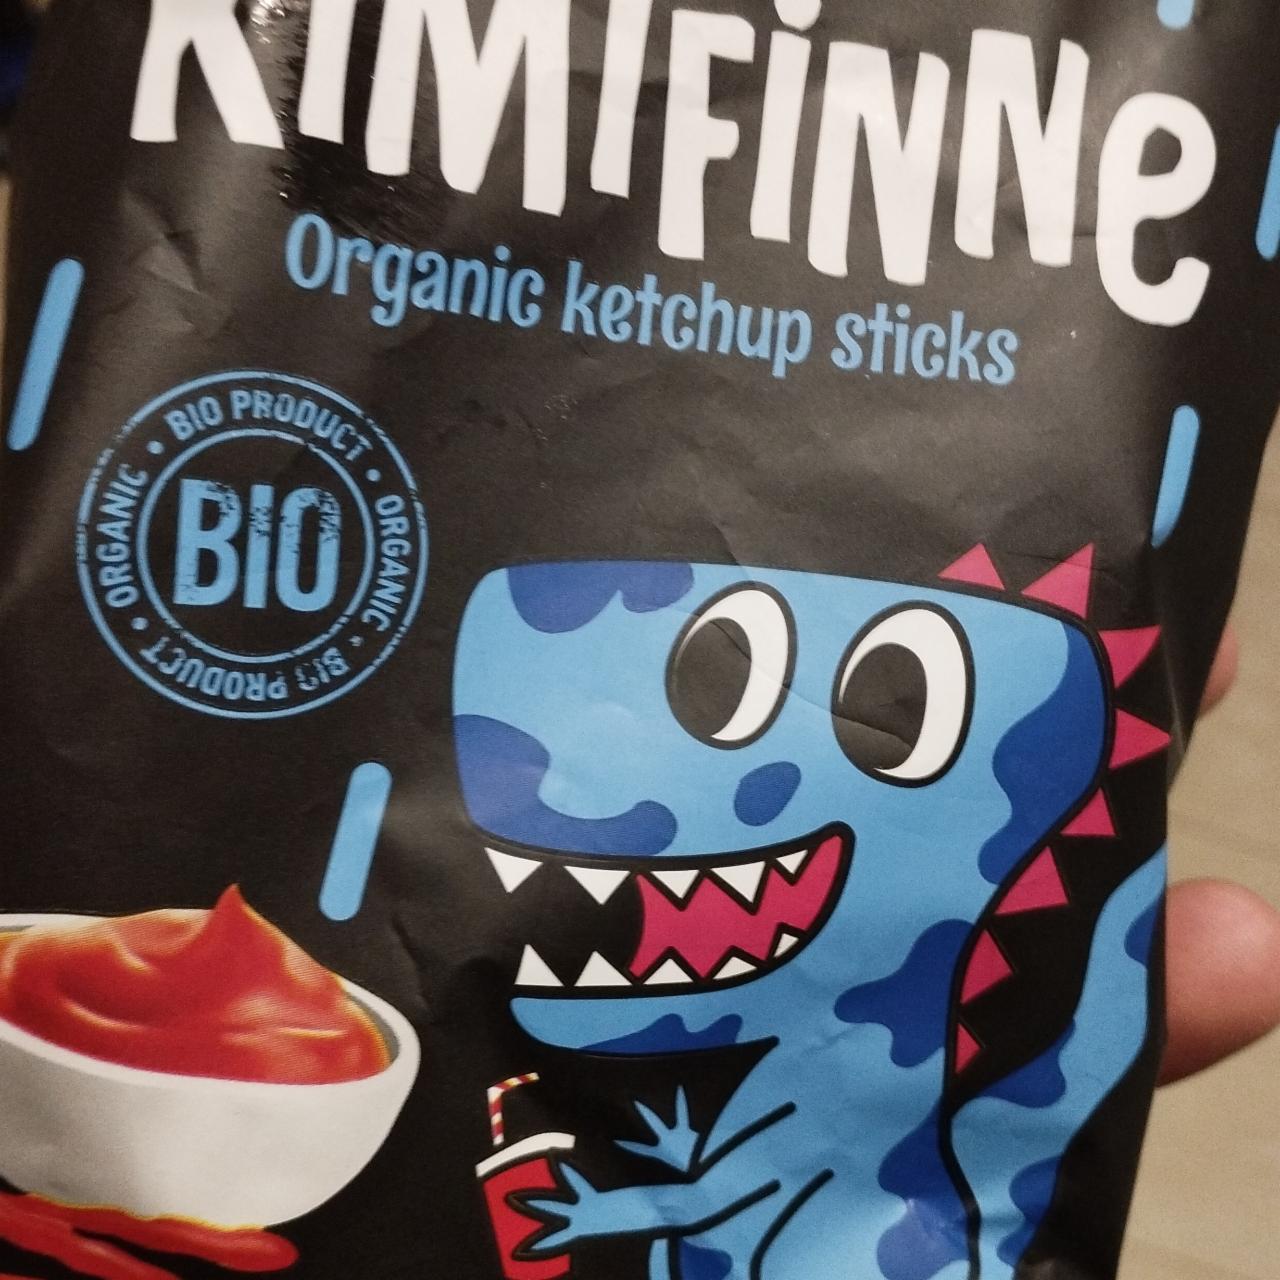 Fotografie - Kimifinne Organic Ketchup Sticks McLLoyd's